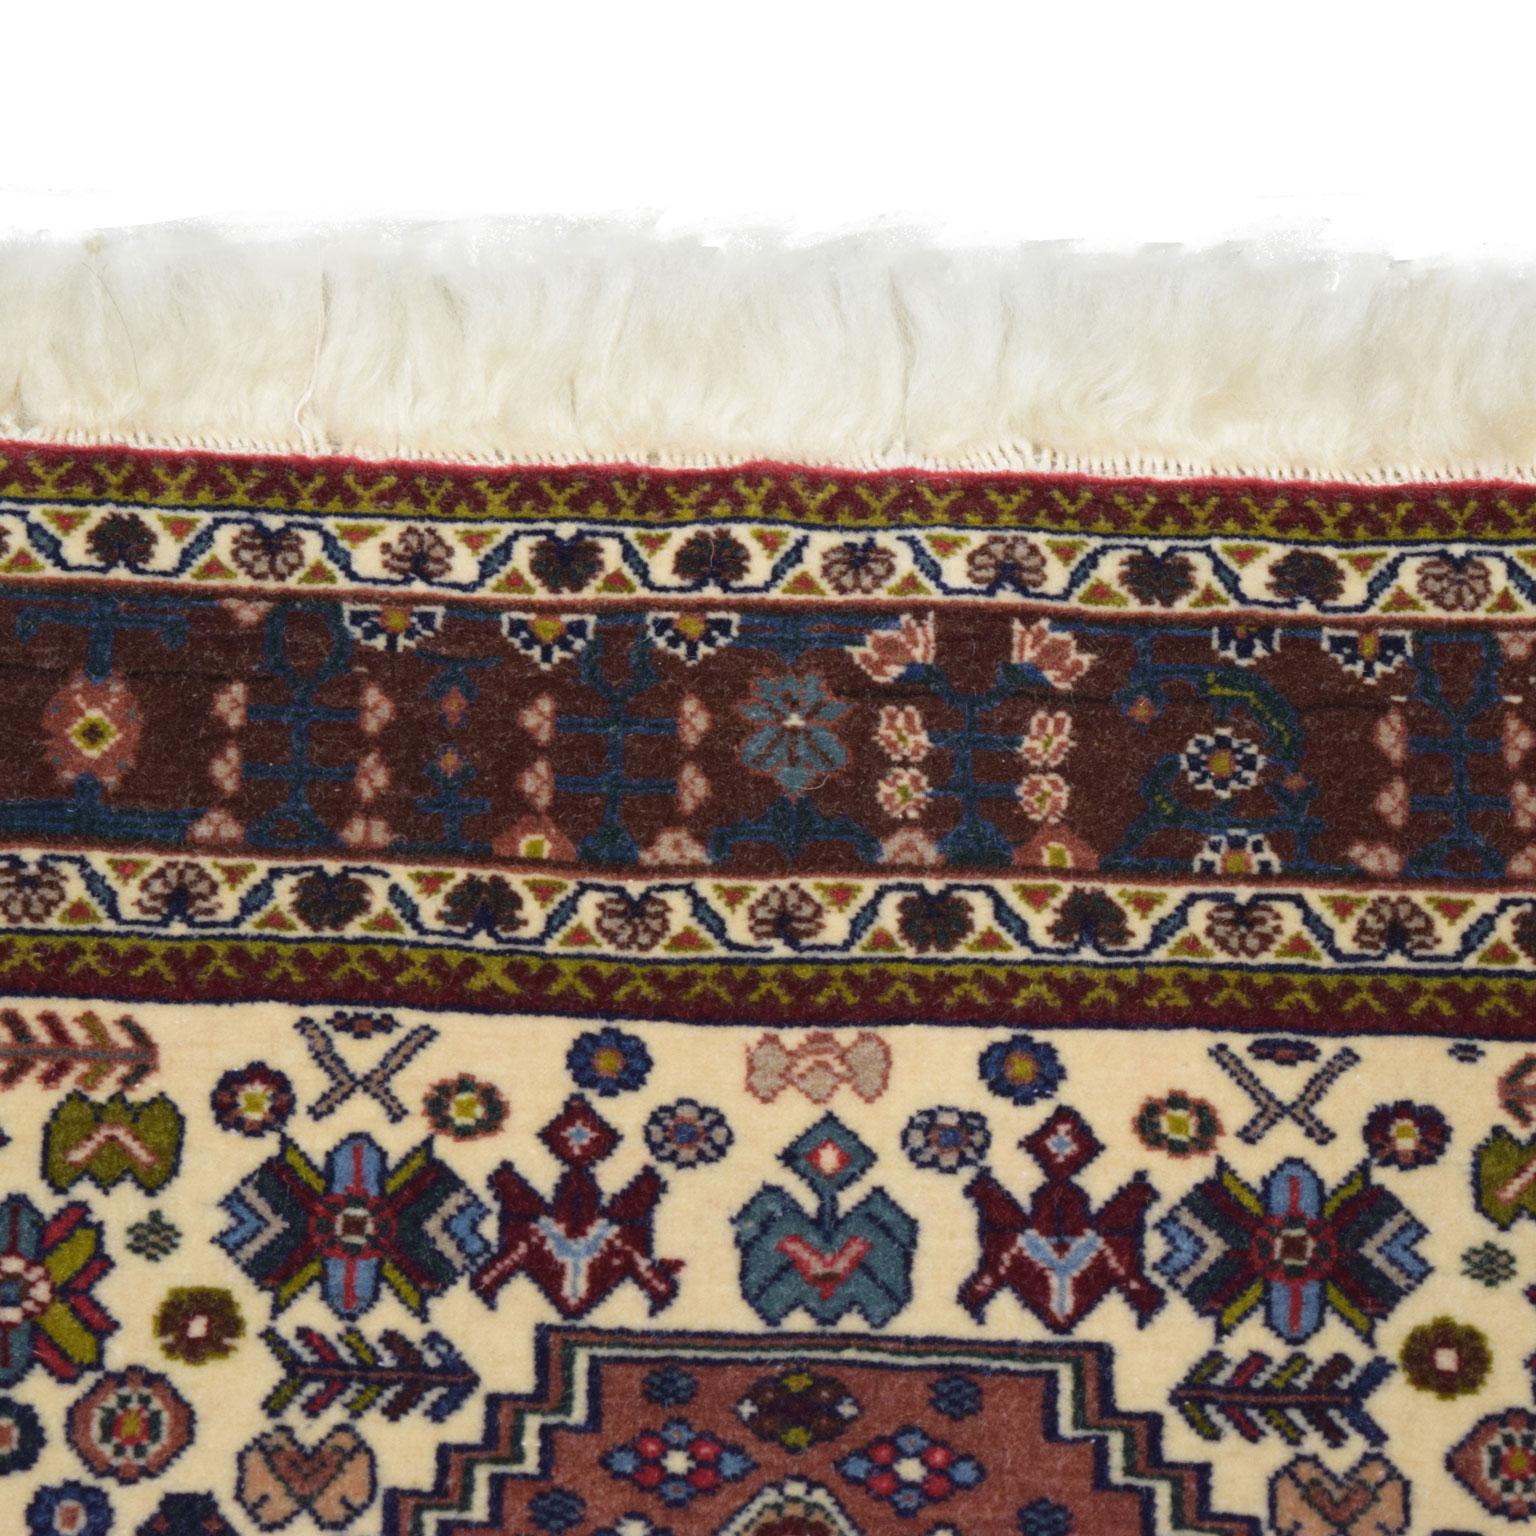 Contemporary Persian Kashkouli Tribal Rug, Blue, Cream and Purple, 3' x 5'